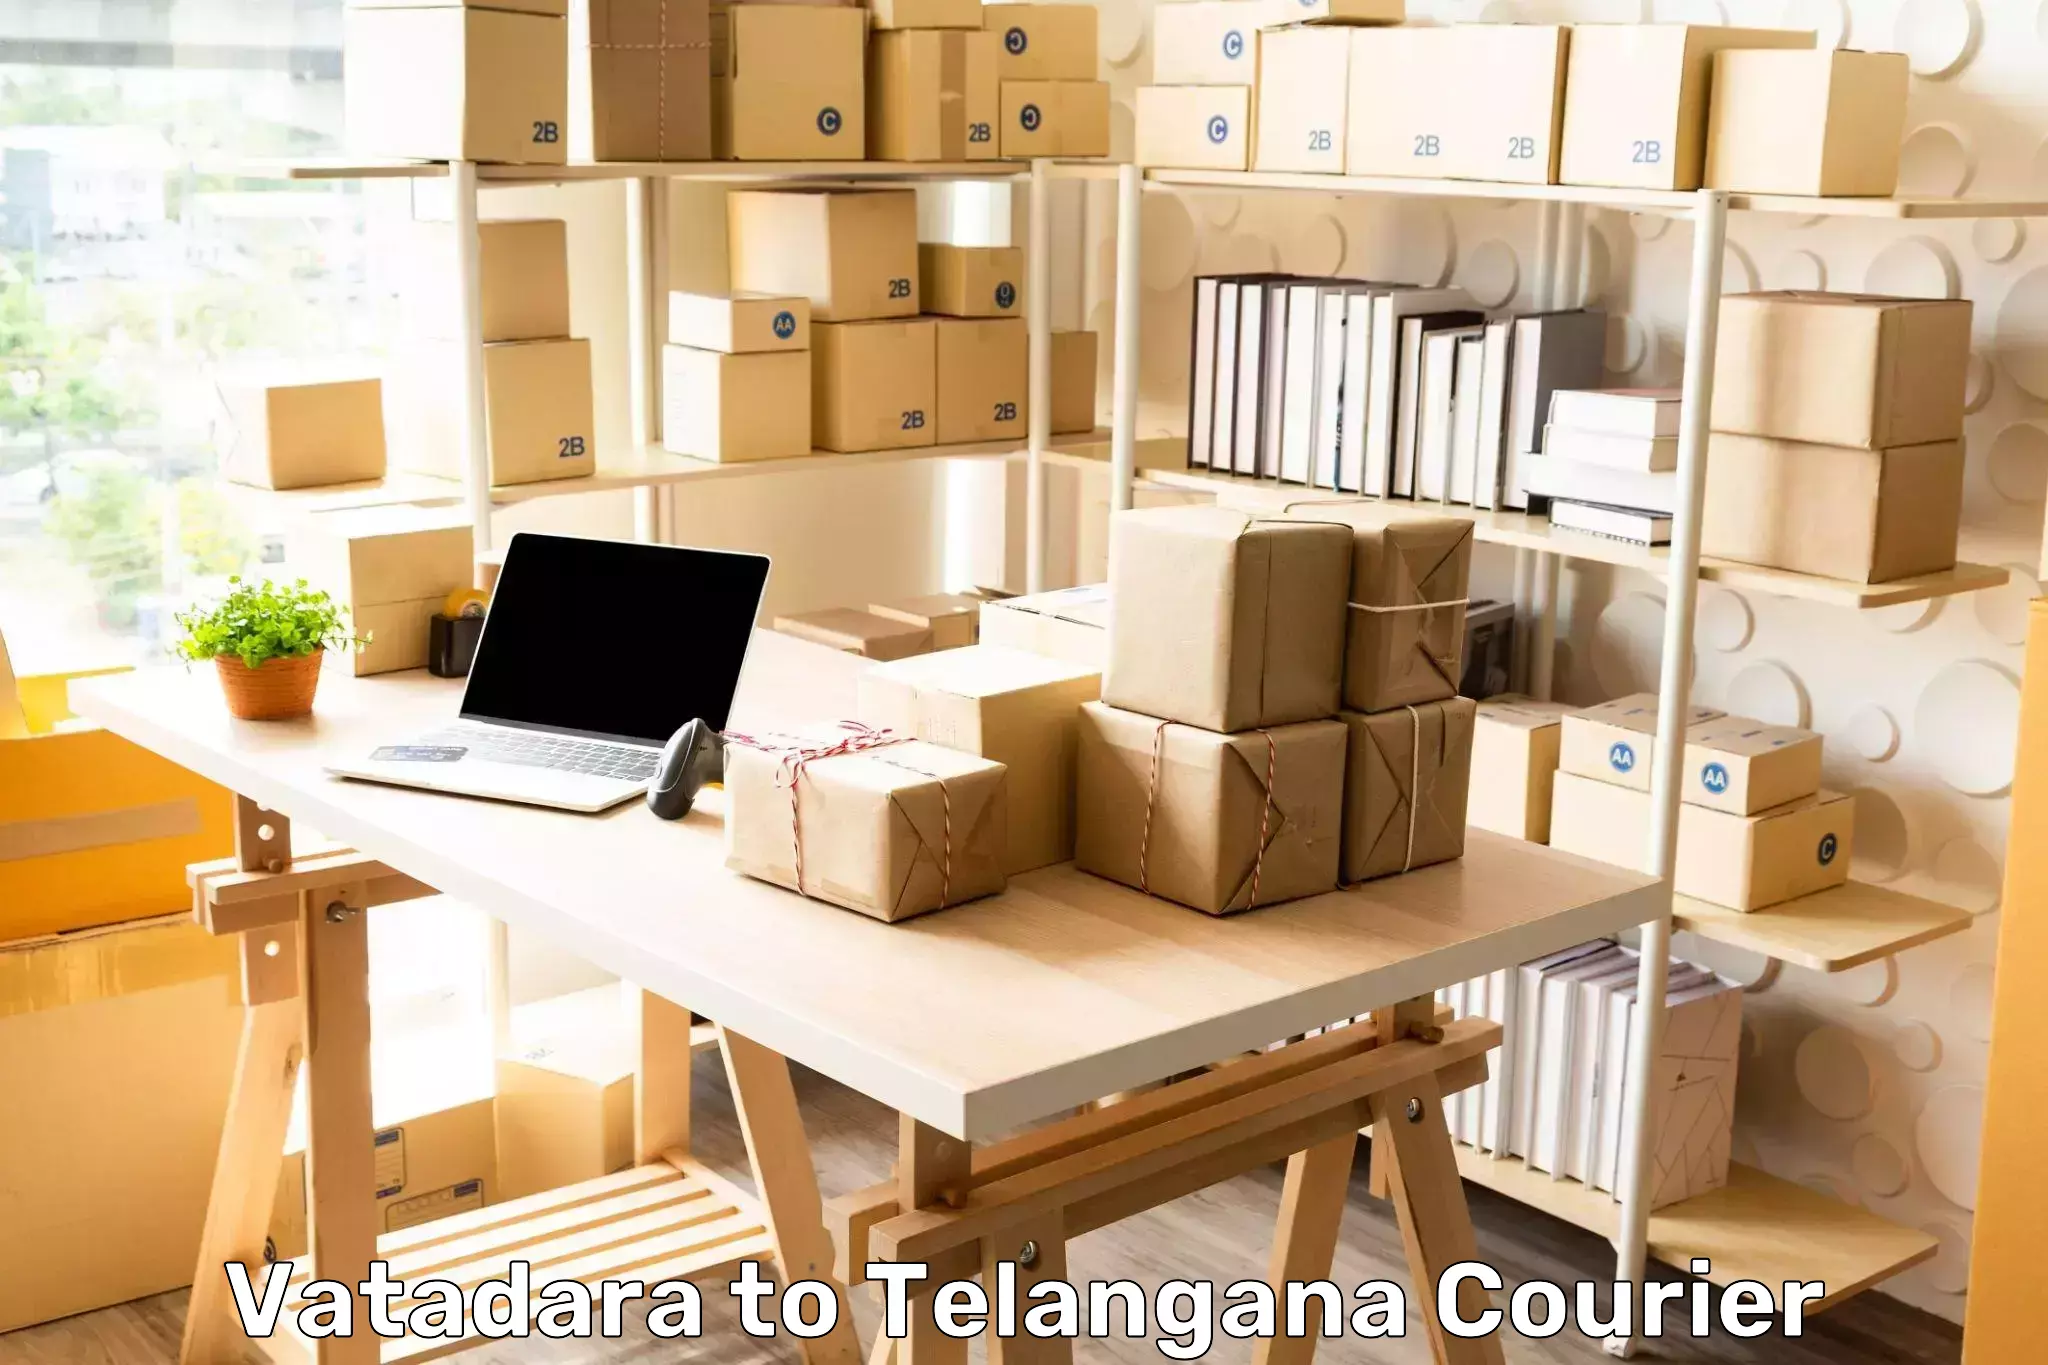 Doorstep delivery service Vatadara to Telangana